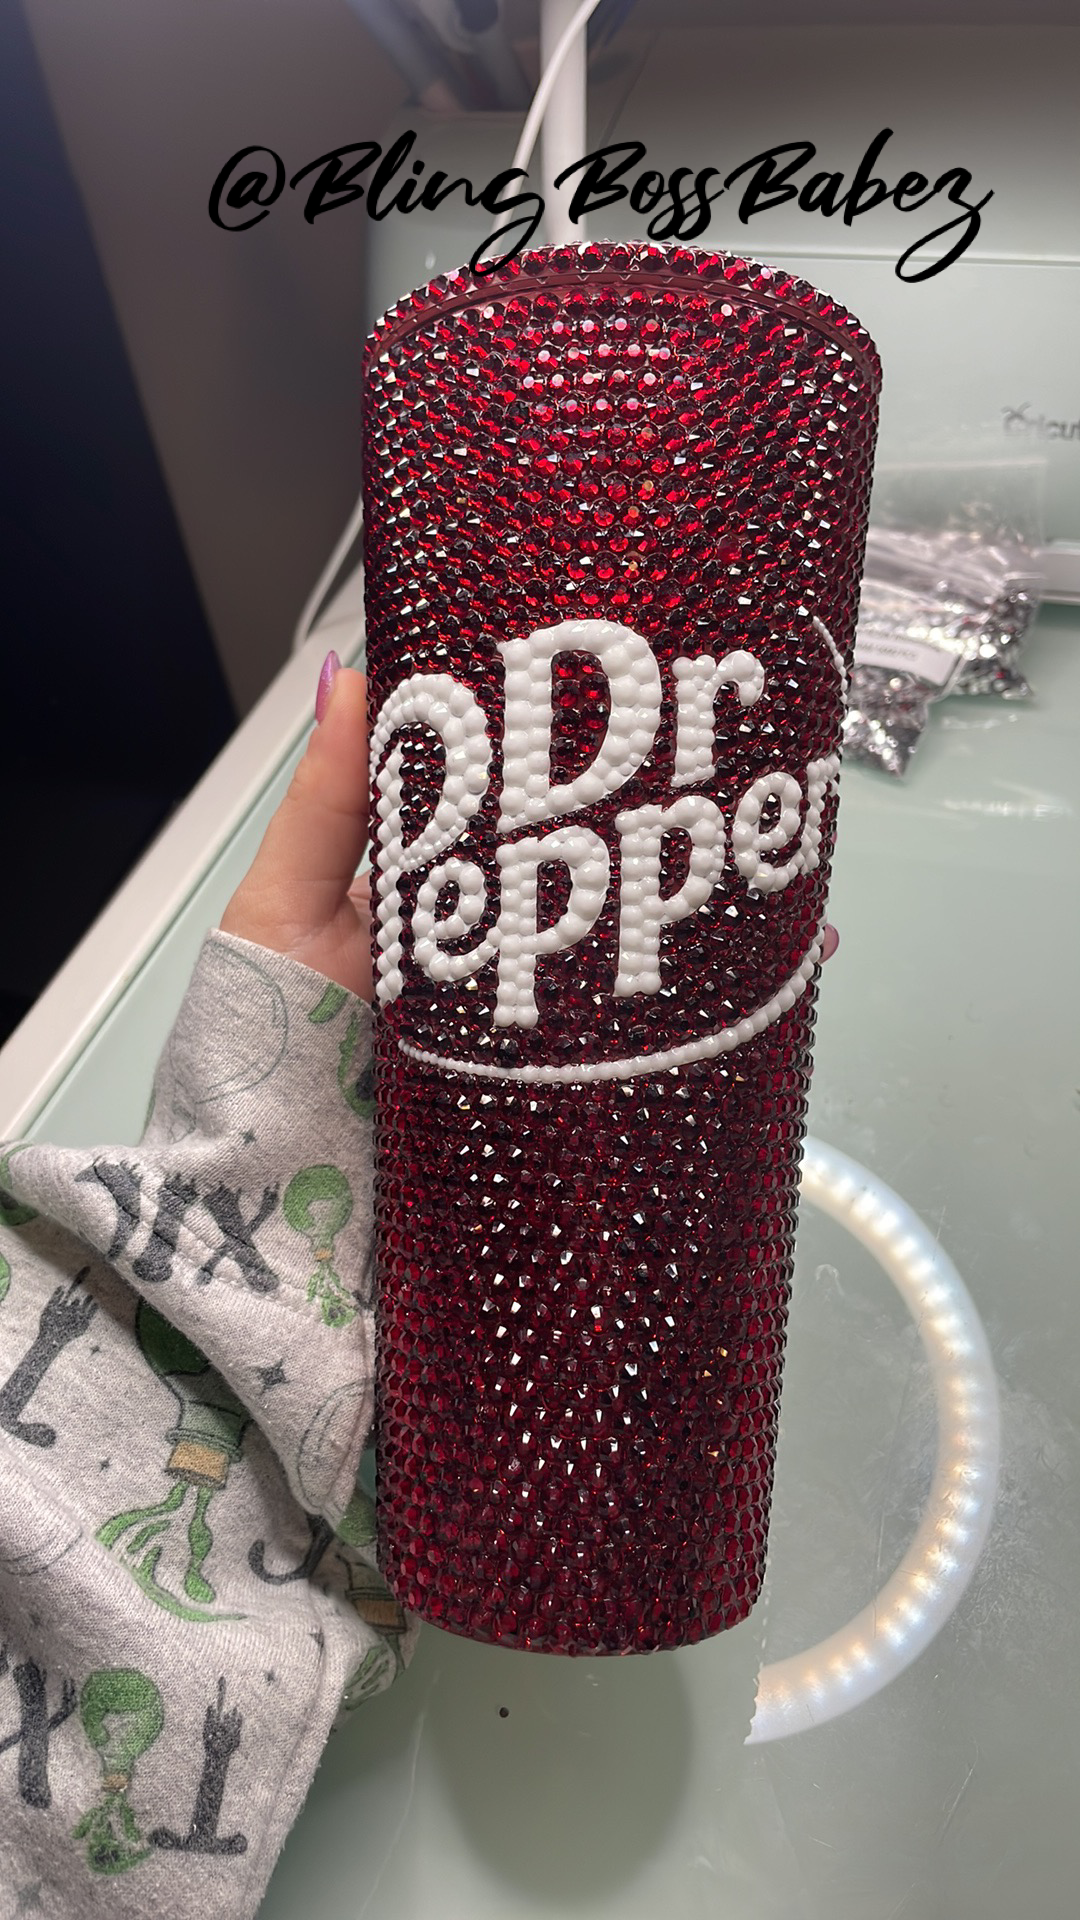 Dr. Pepper Tumbler